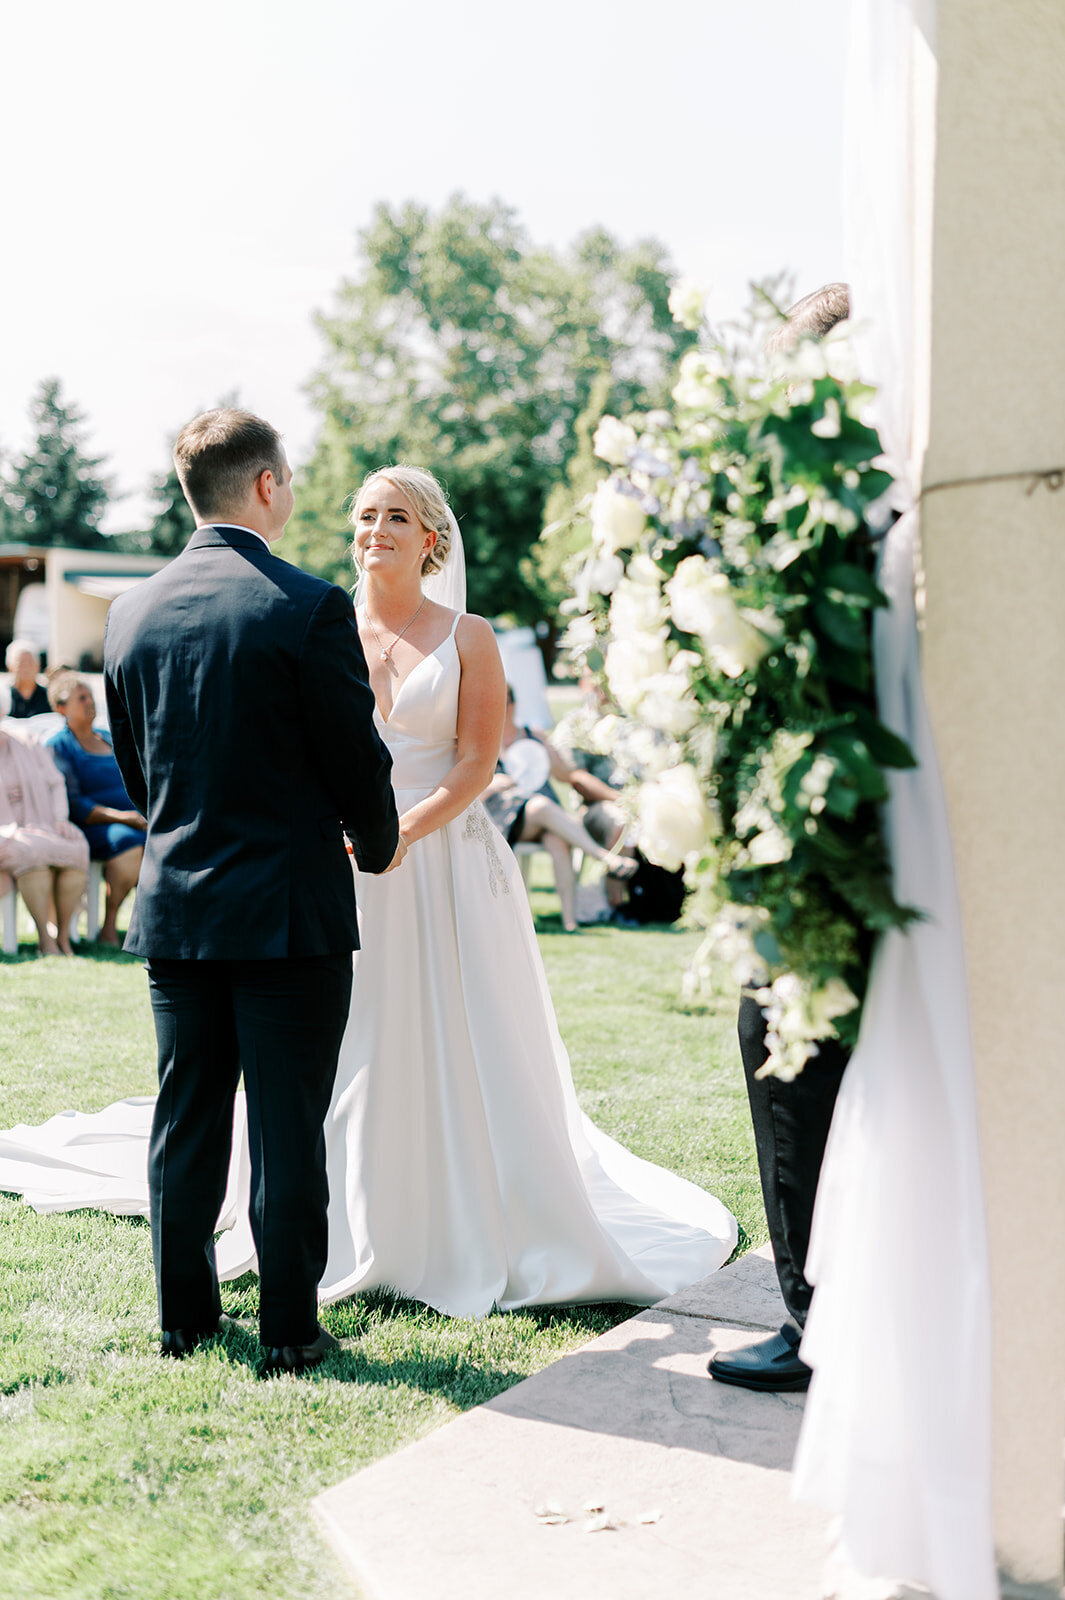 Wedding ceremony at Boise wedding venue, Honalee Farms, taken by the Best Boise Wedding Photographers